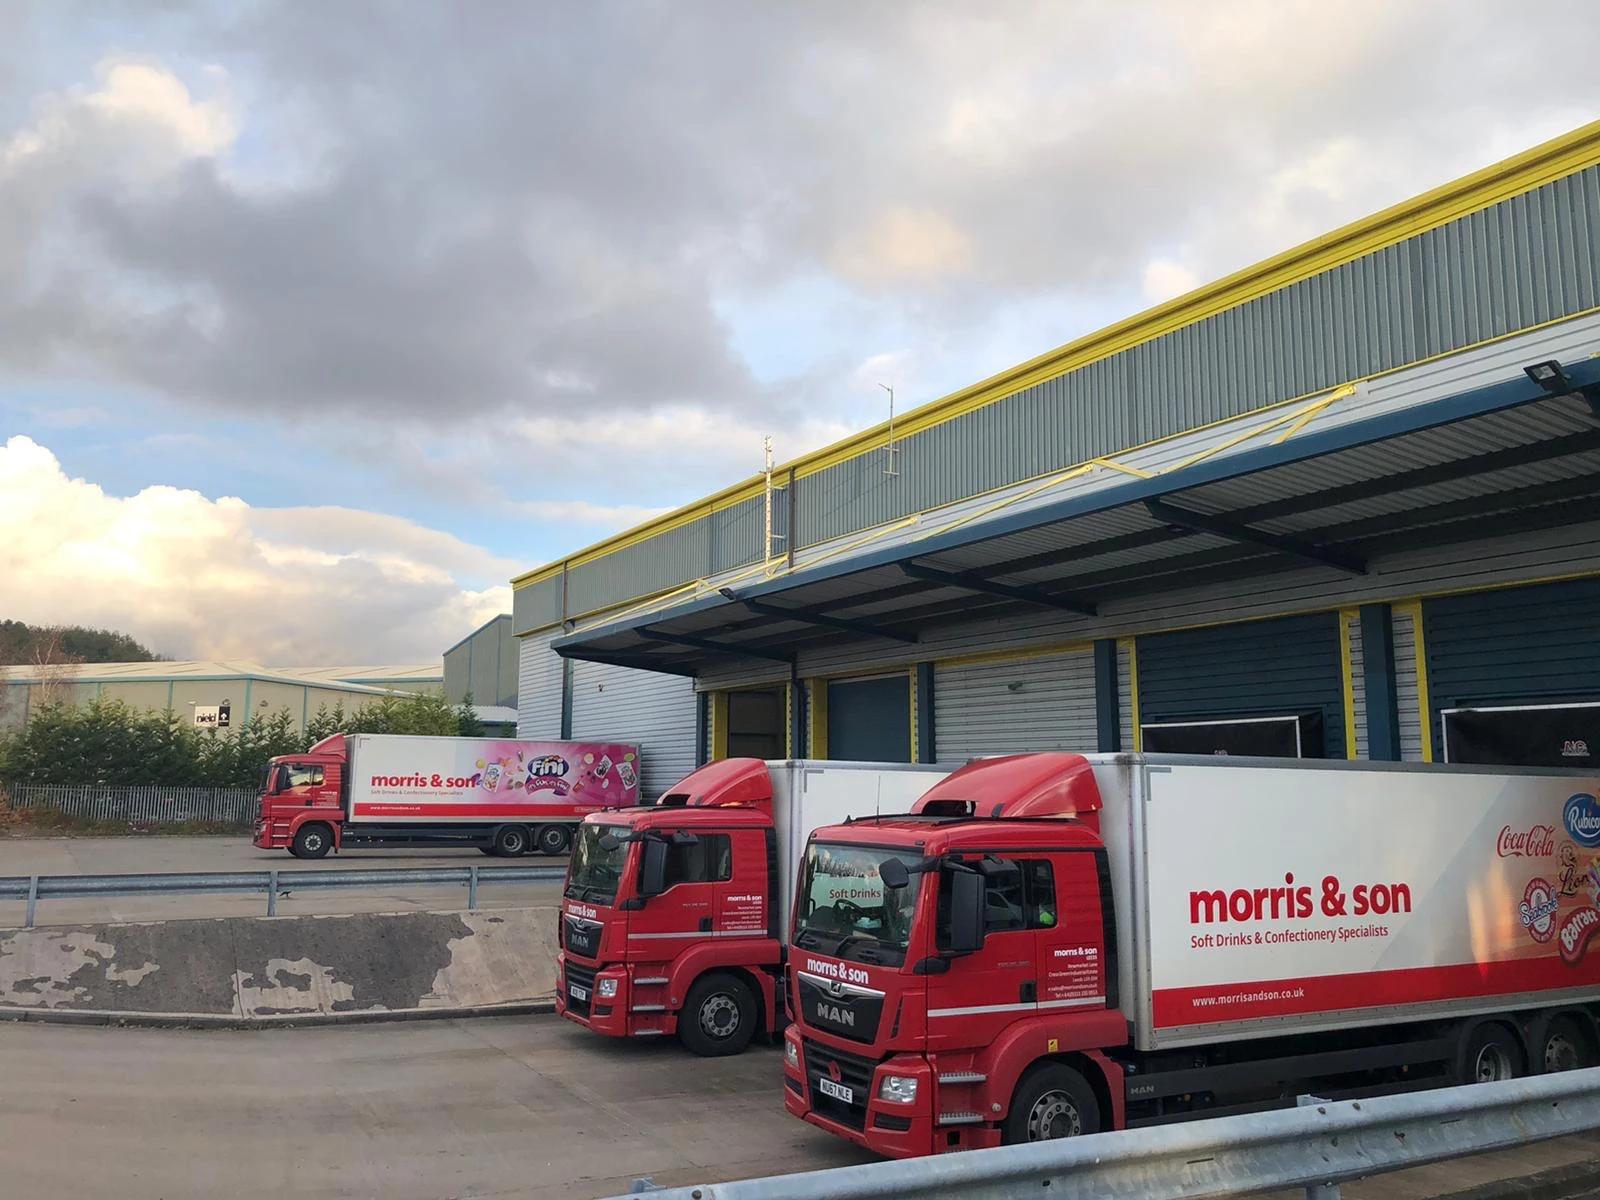 The new Morris & Son premises in Barnsley.